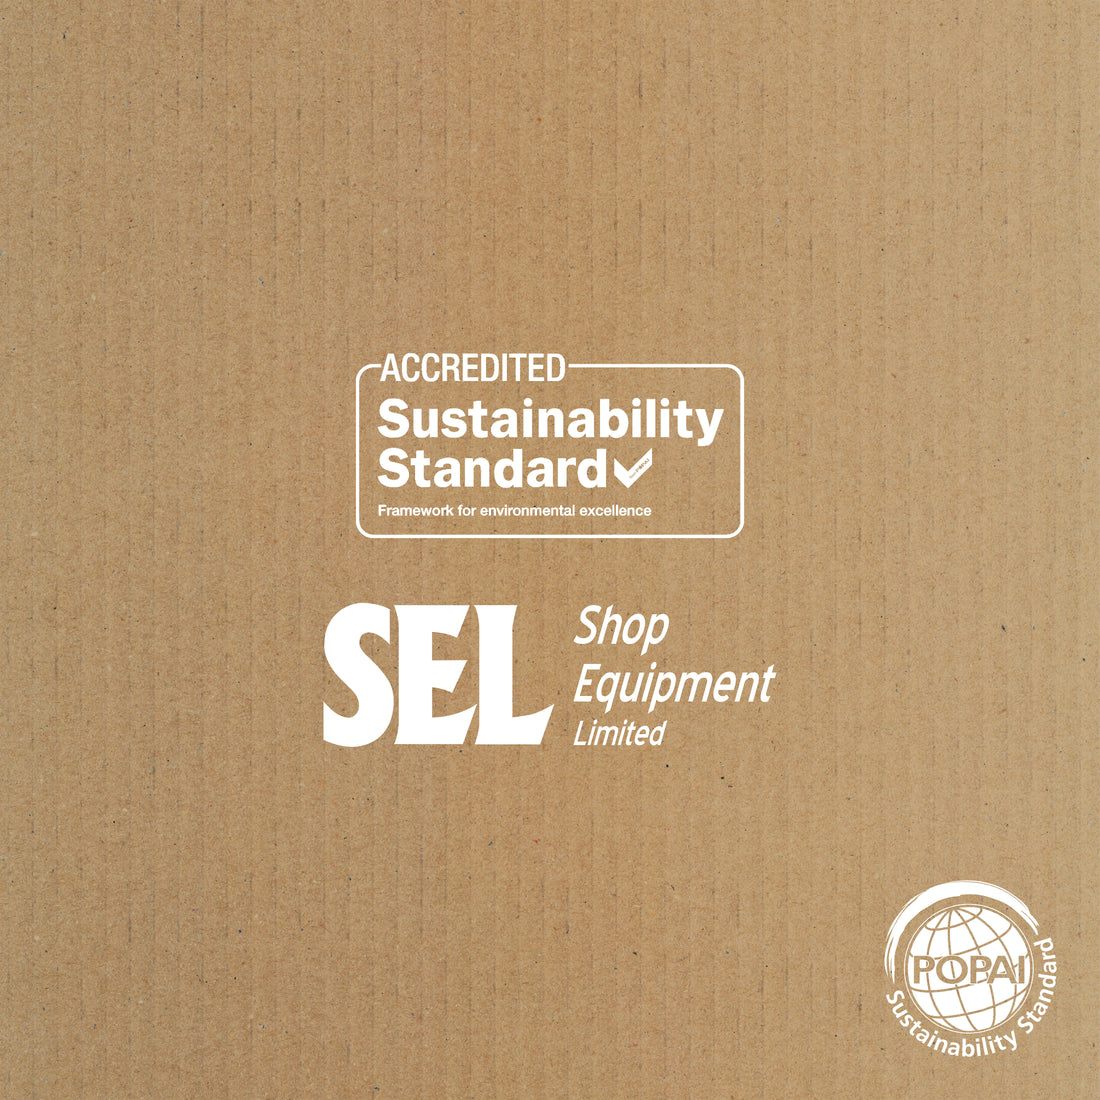 POPAI Sustainability Standard Accreditation